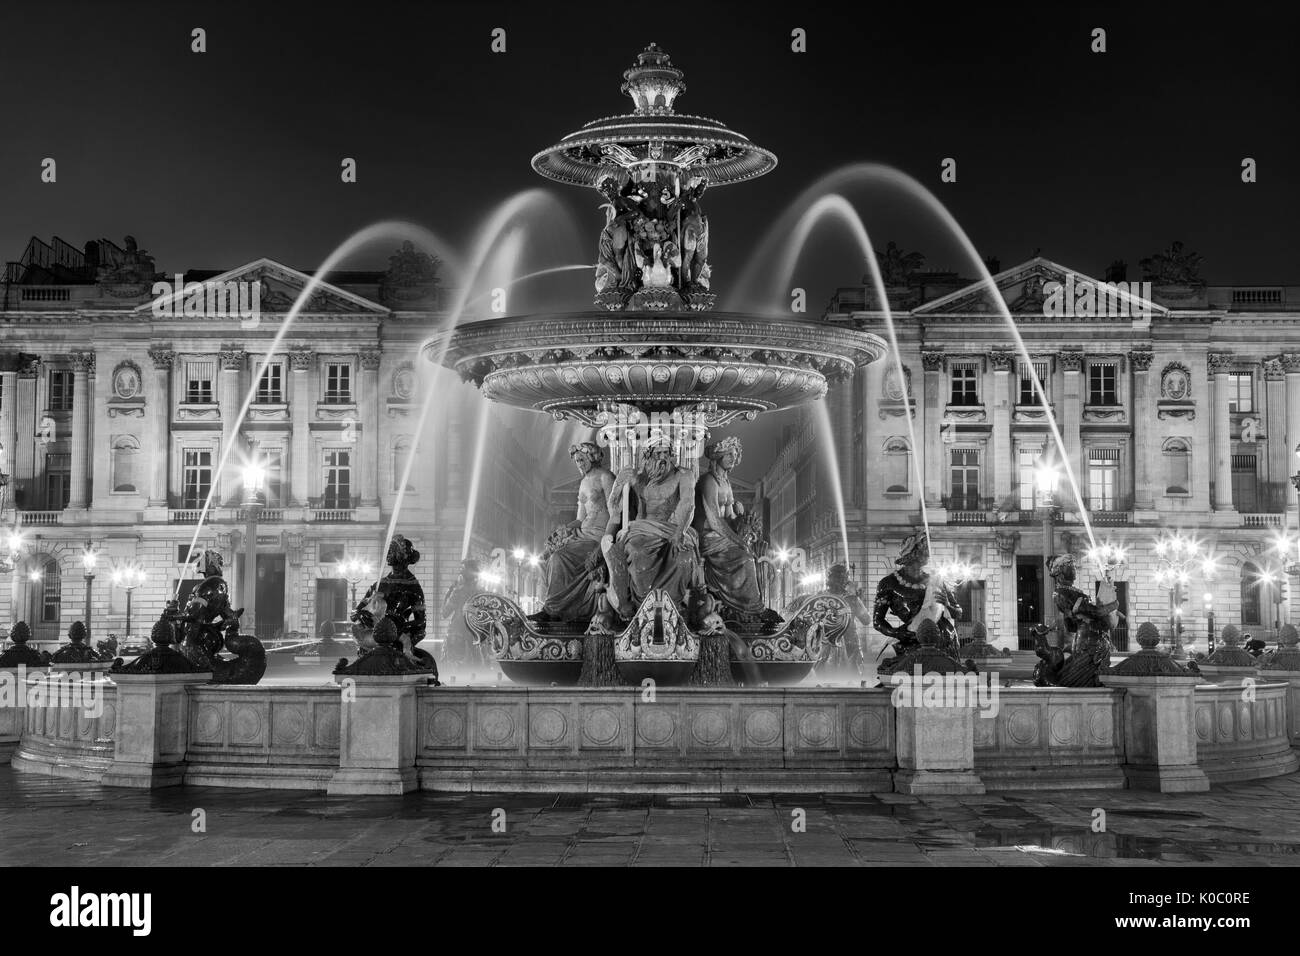 Fontaine des Fleuves, Brunnen von Flüssen in Place de la Concorde, Paris, Frankreich Stockfoto